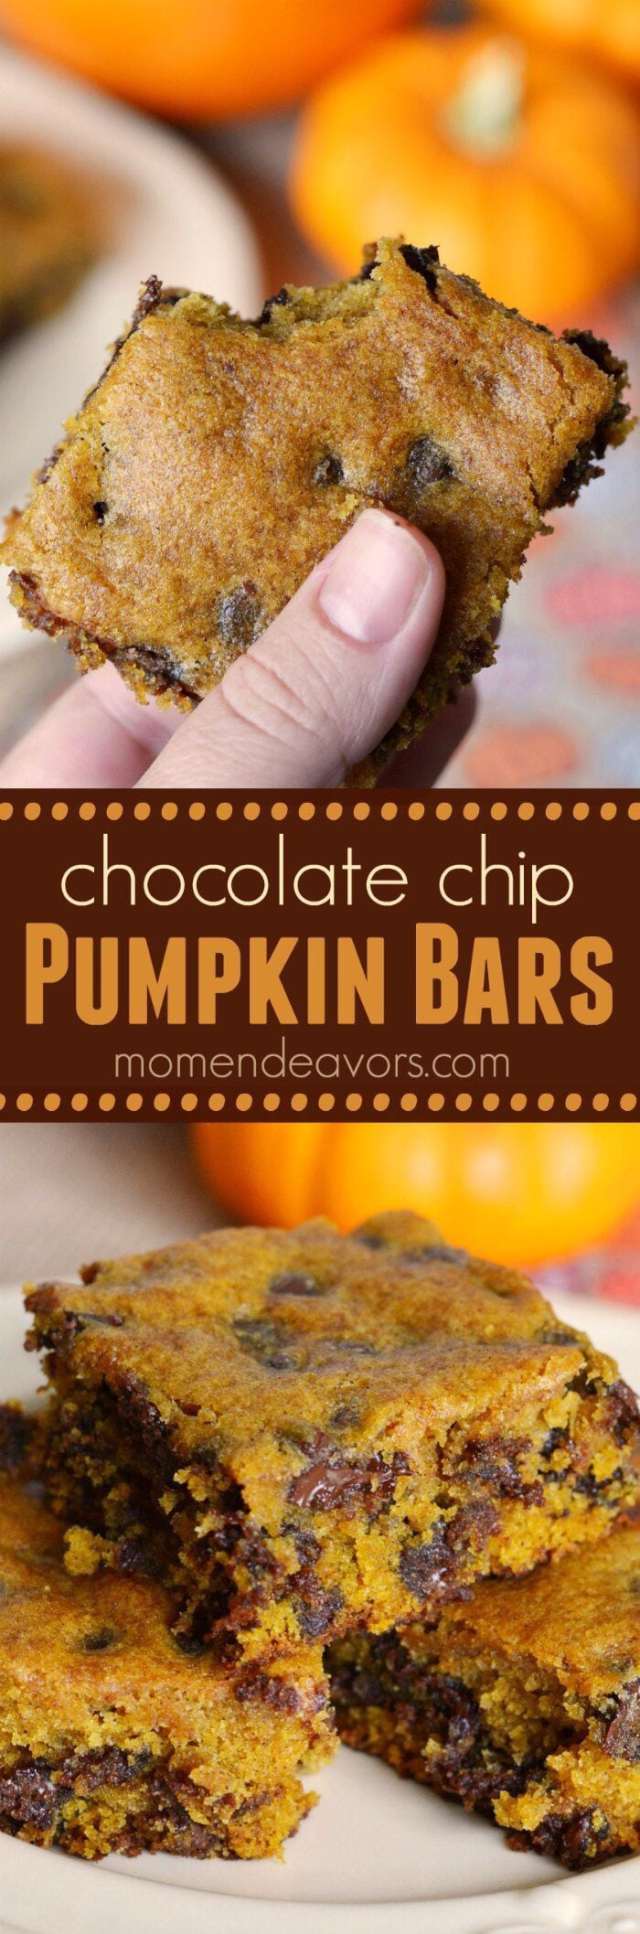 Pumpkin Spice Recipes: Chocolate Chip Pumpkin Bars